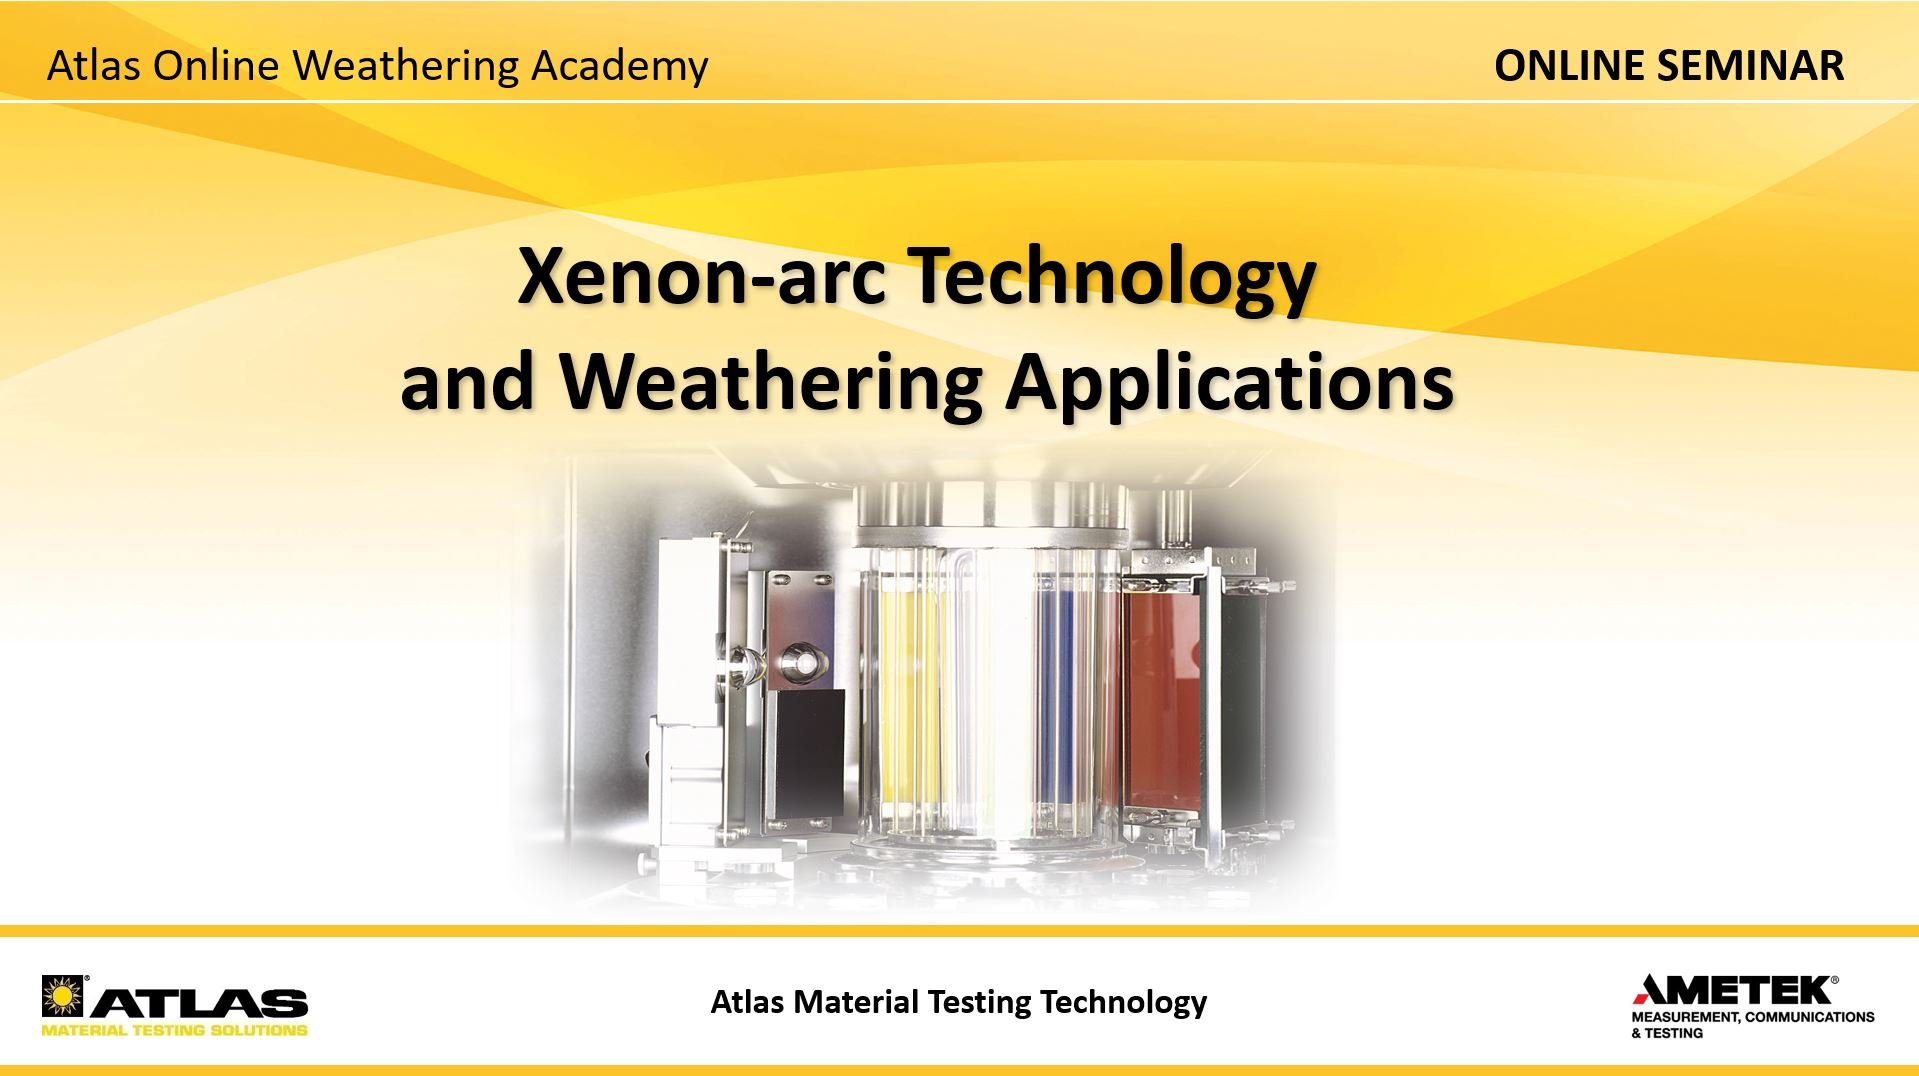 20211001_Coverbild Nurturing_Ebene 15_16-9-Online Seminar-Cover-Xenon-Arc Technology and Applications